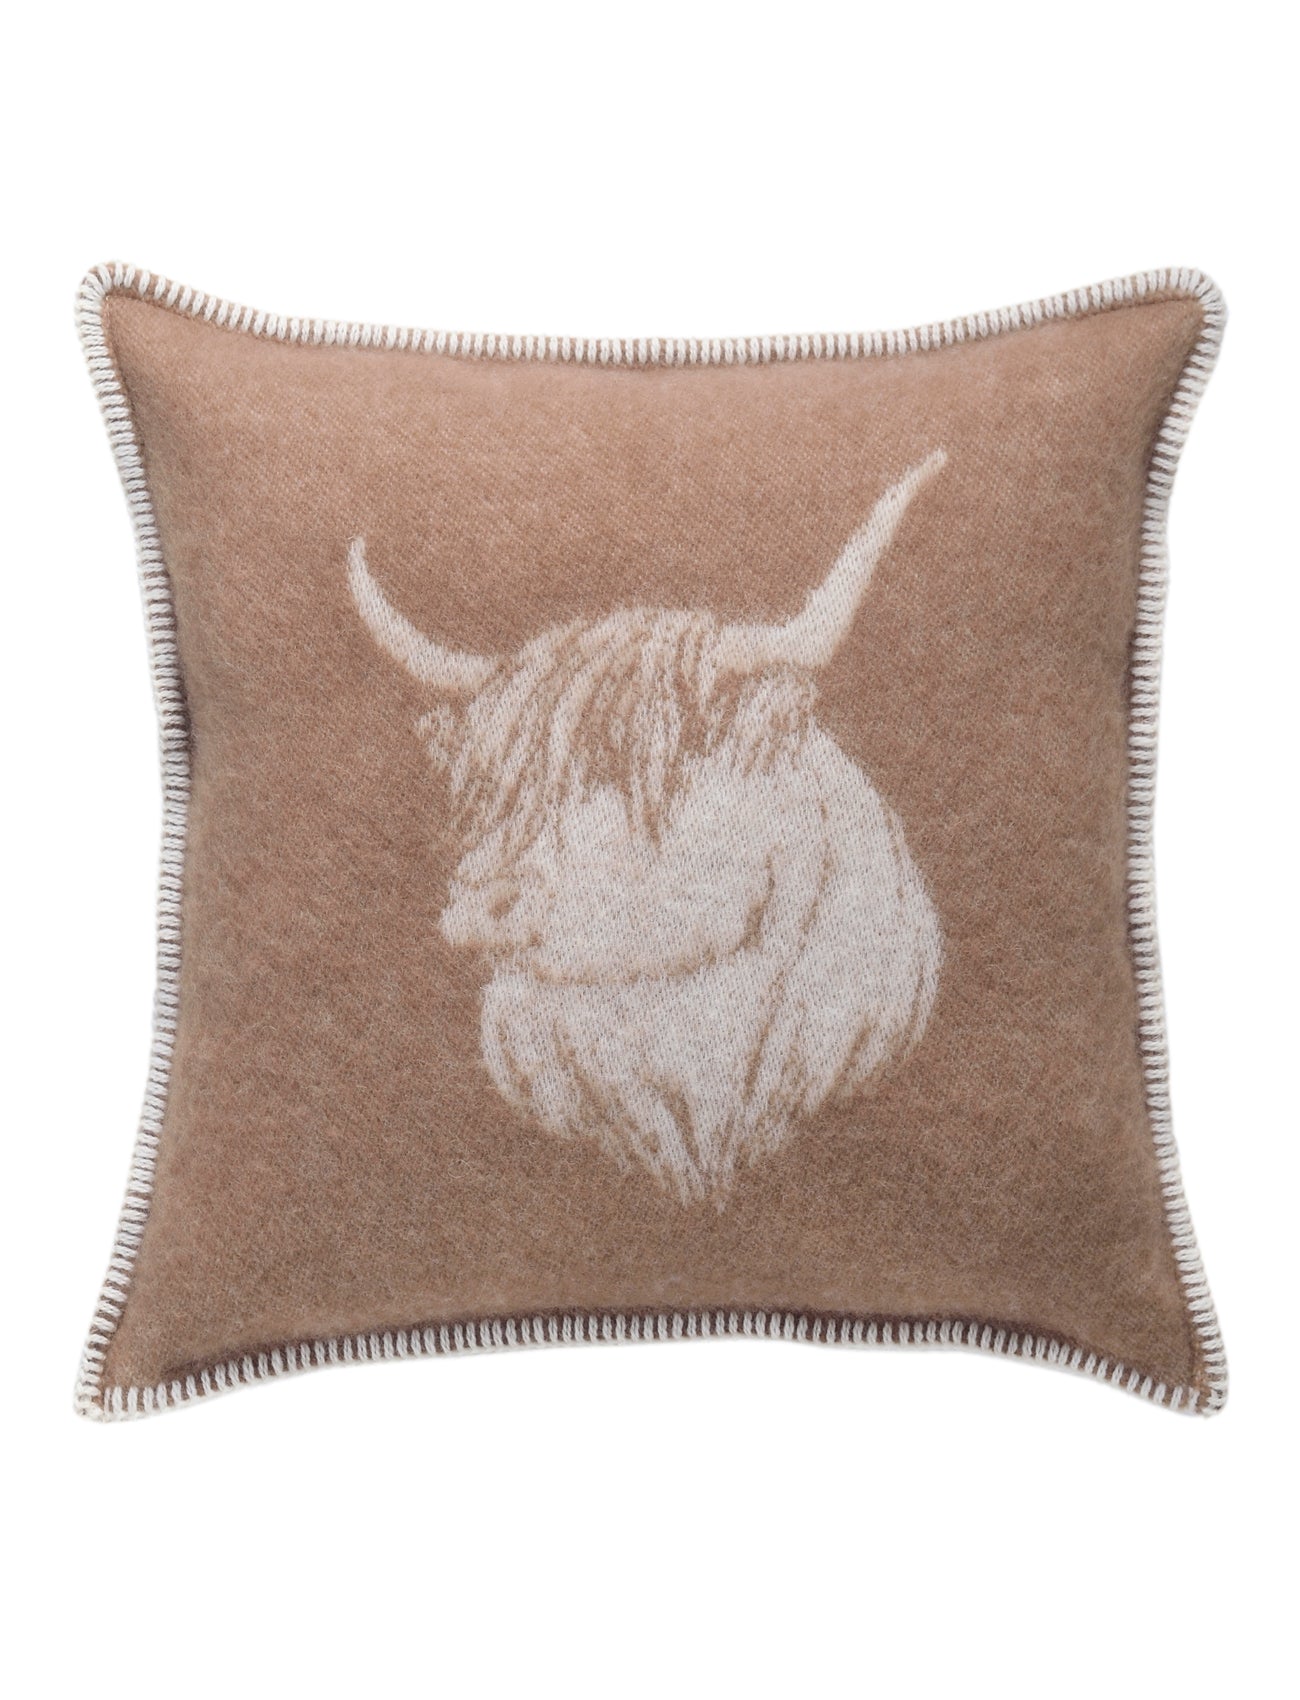 Highland Cow Wool Cushions